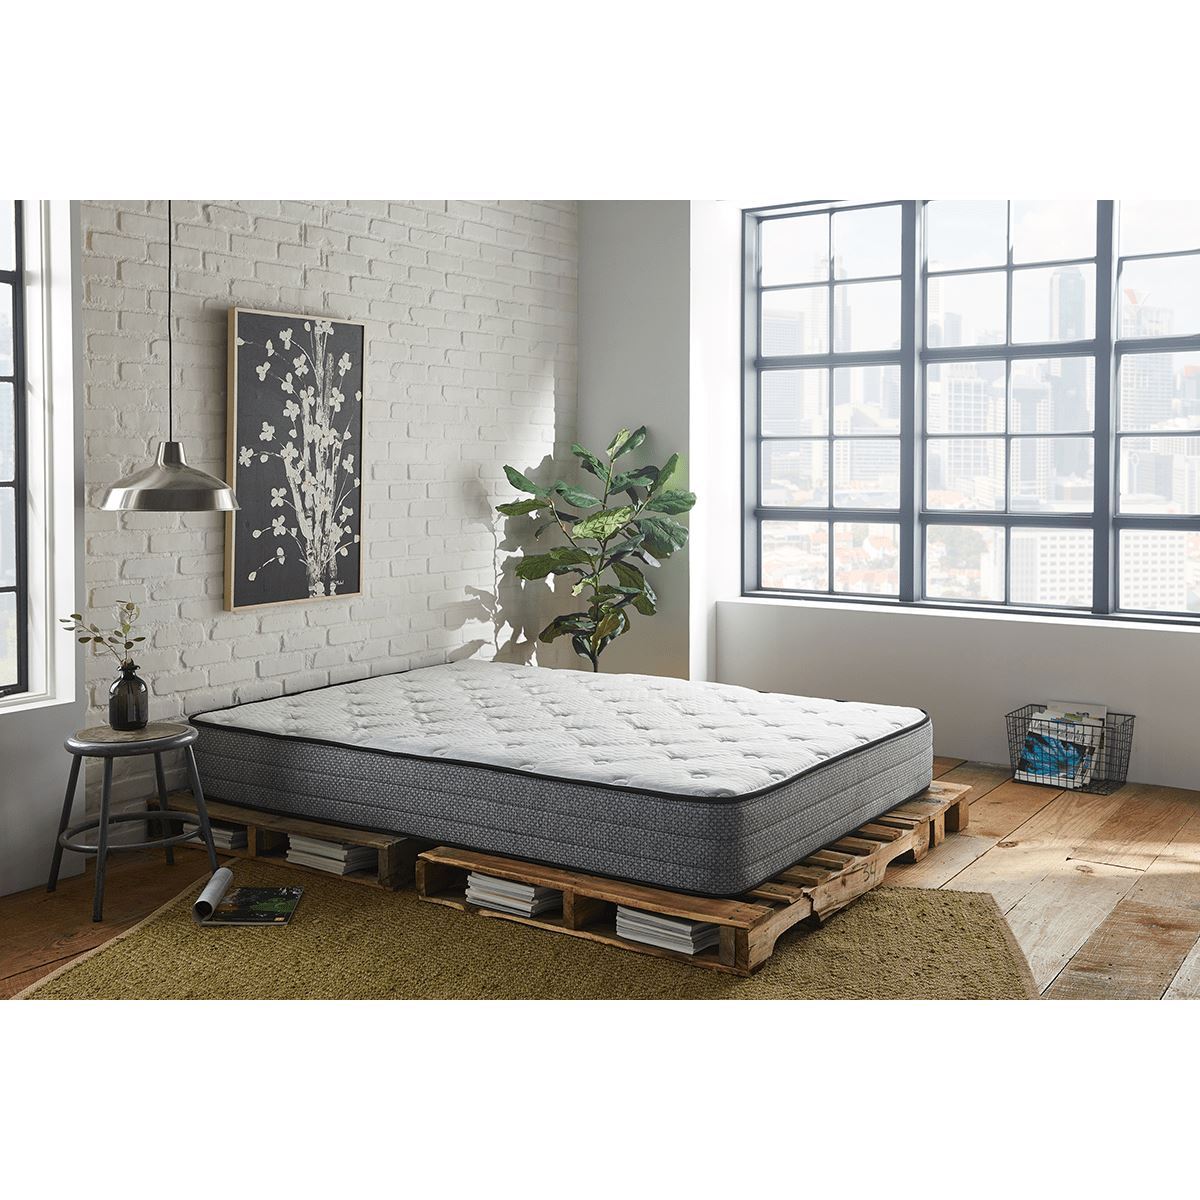 Sleep Inc. by Corsicana 10" Hybrid Mattress In Bedroom